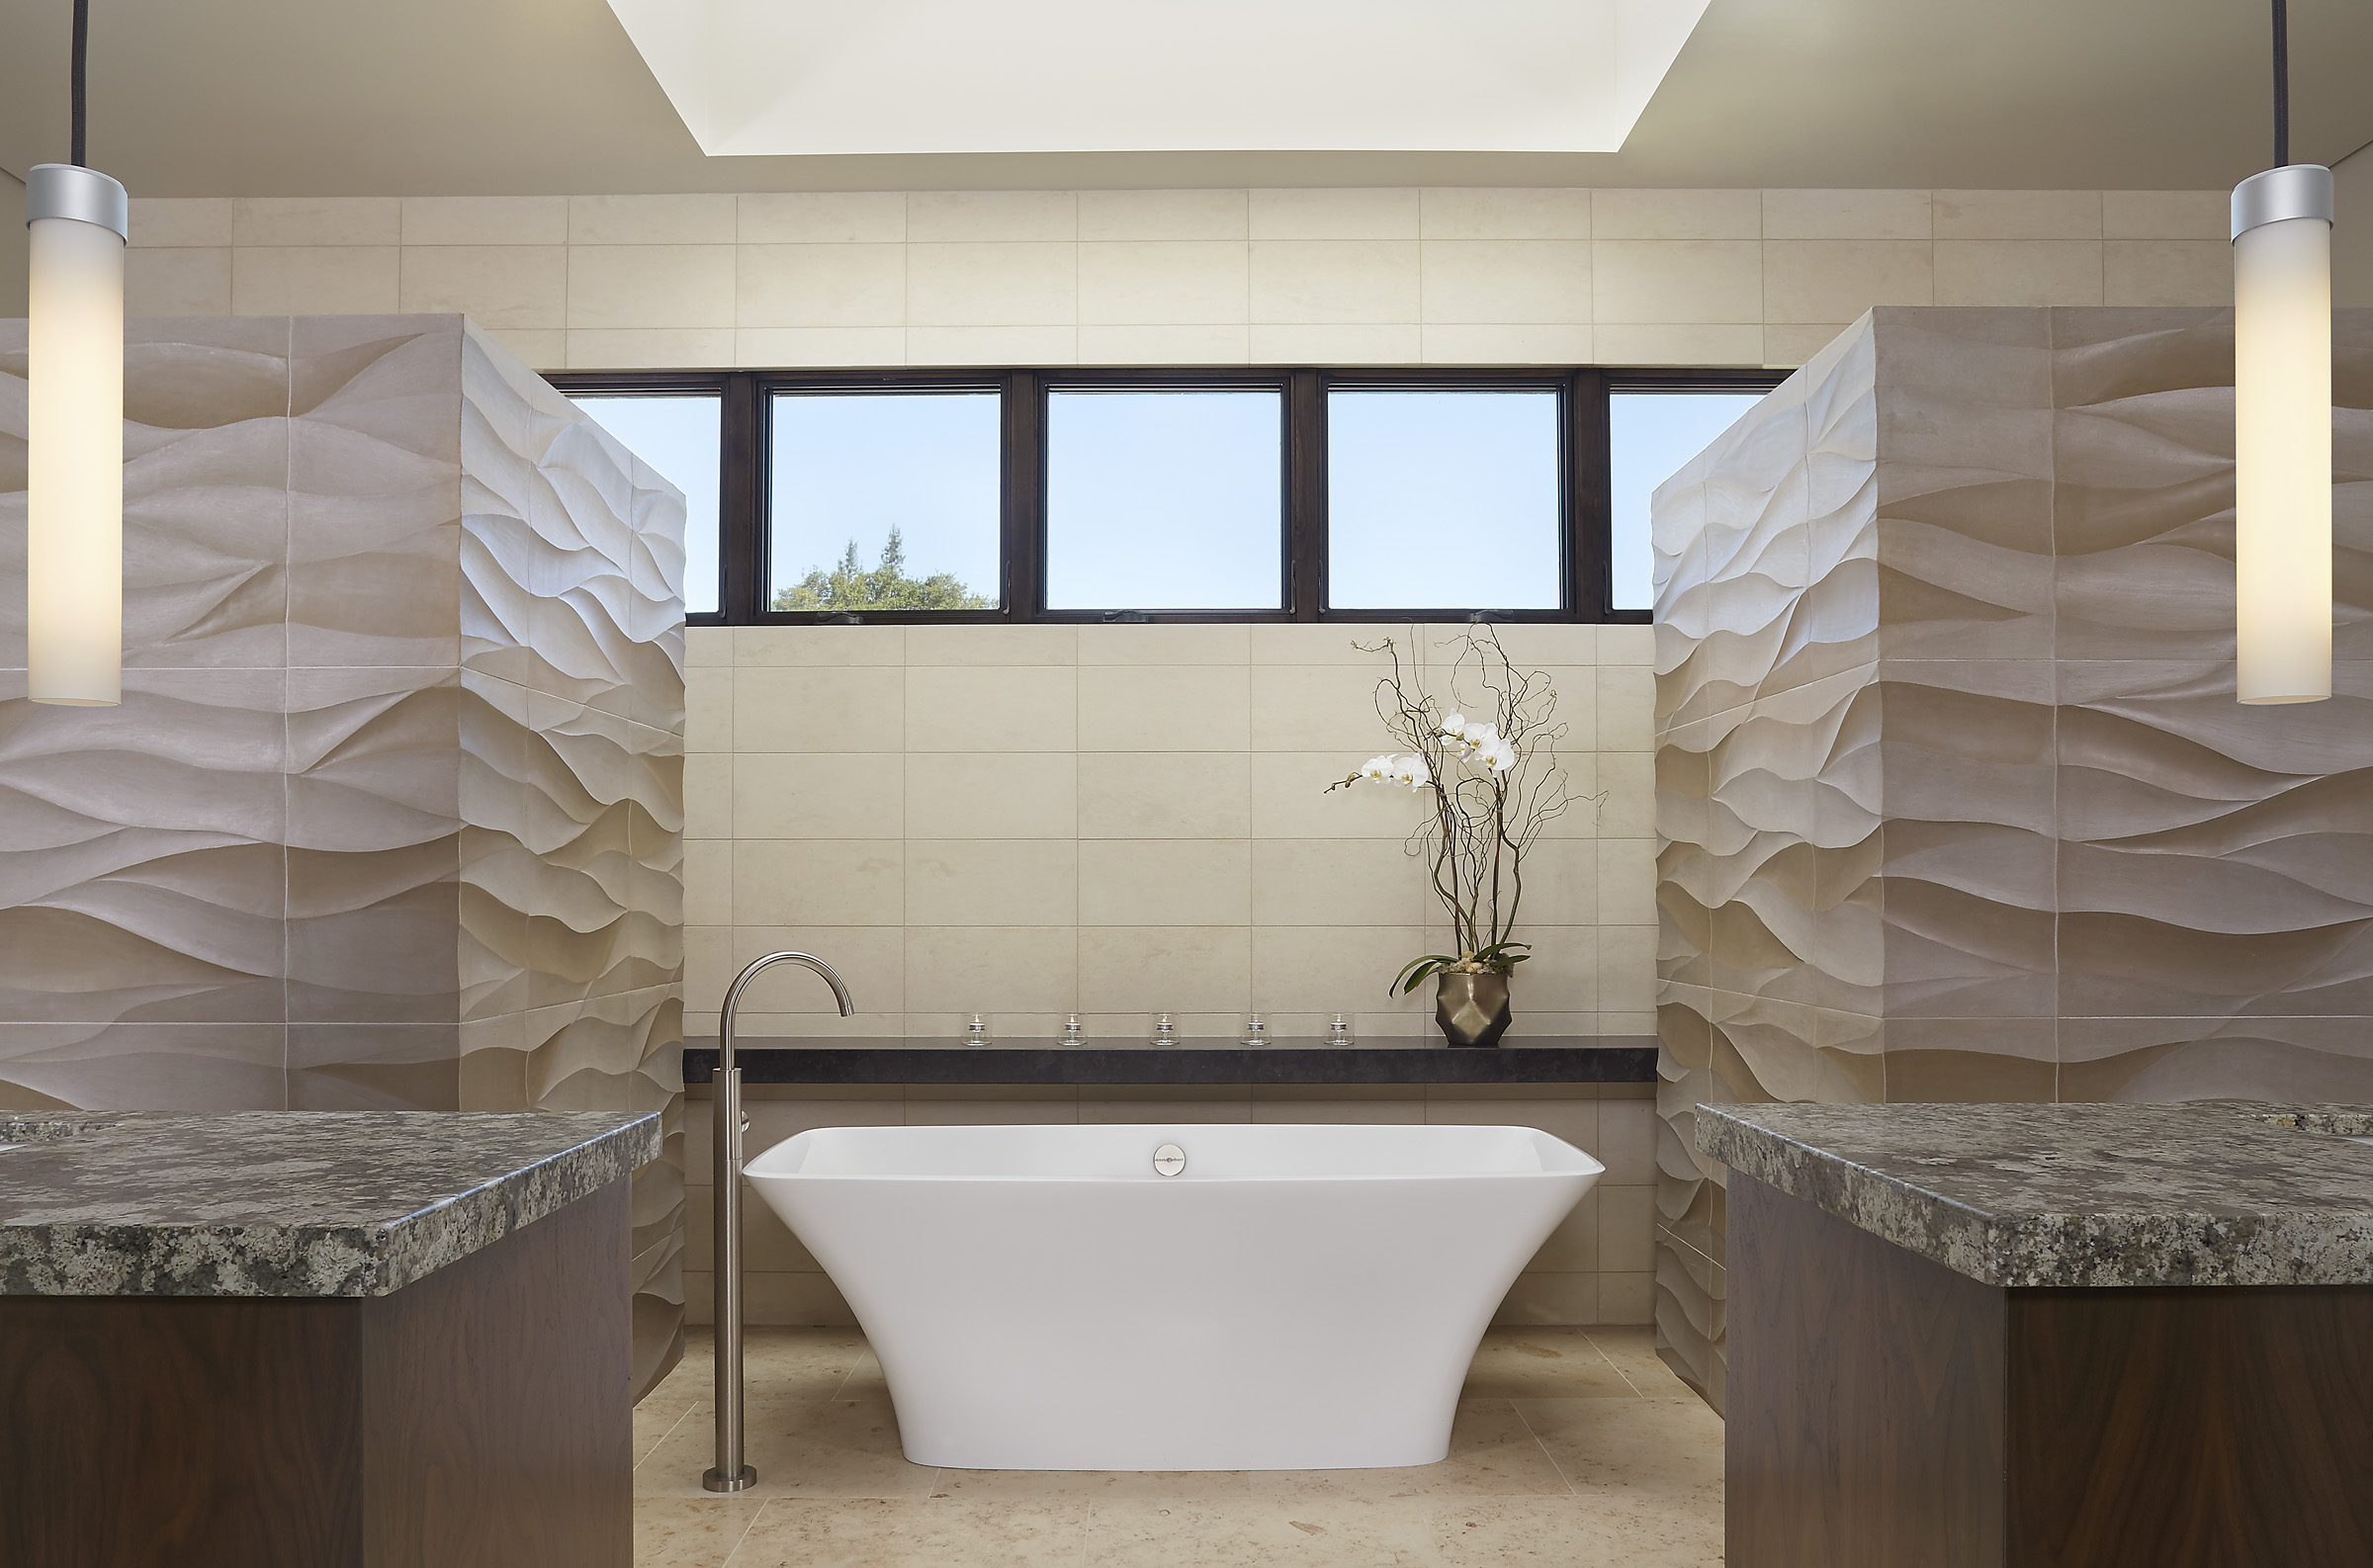 San Jose Bathroom Design